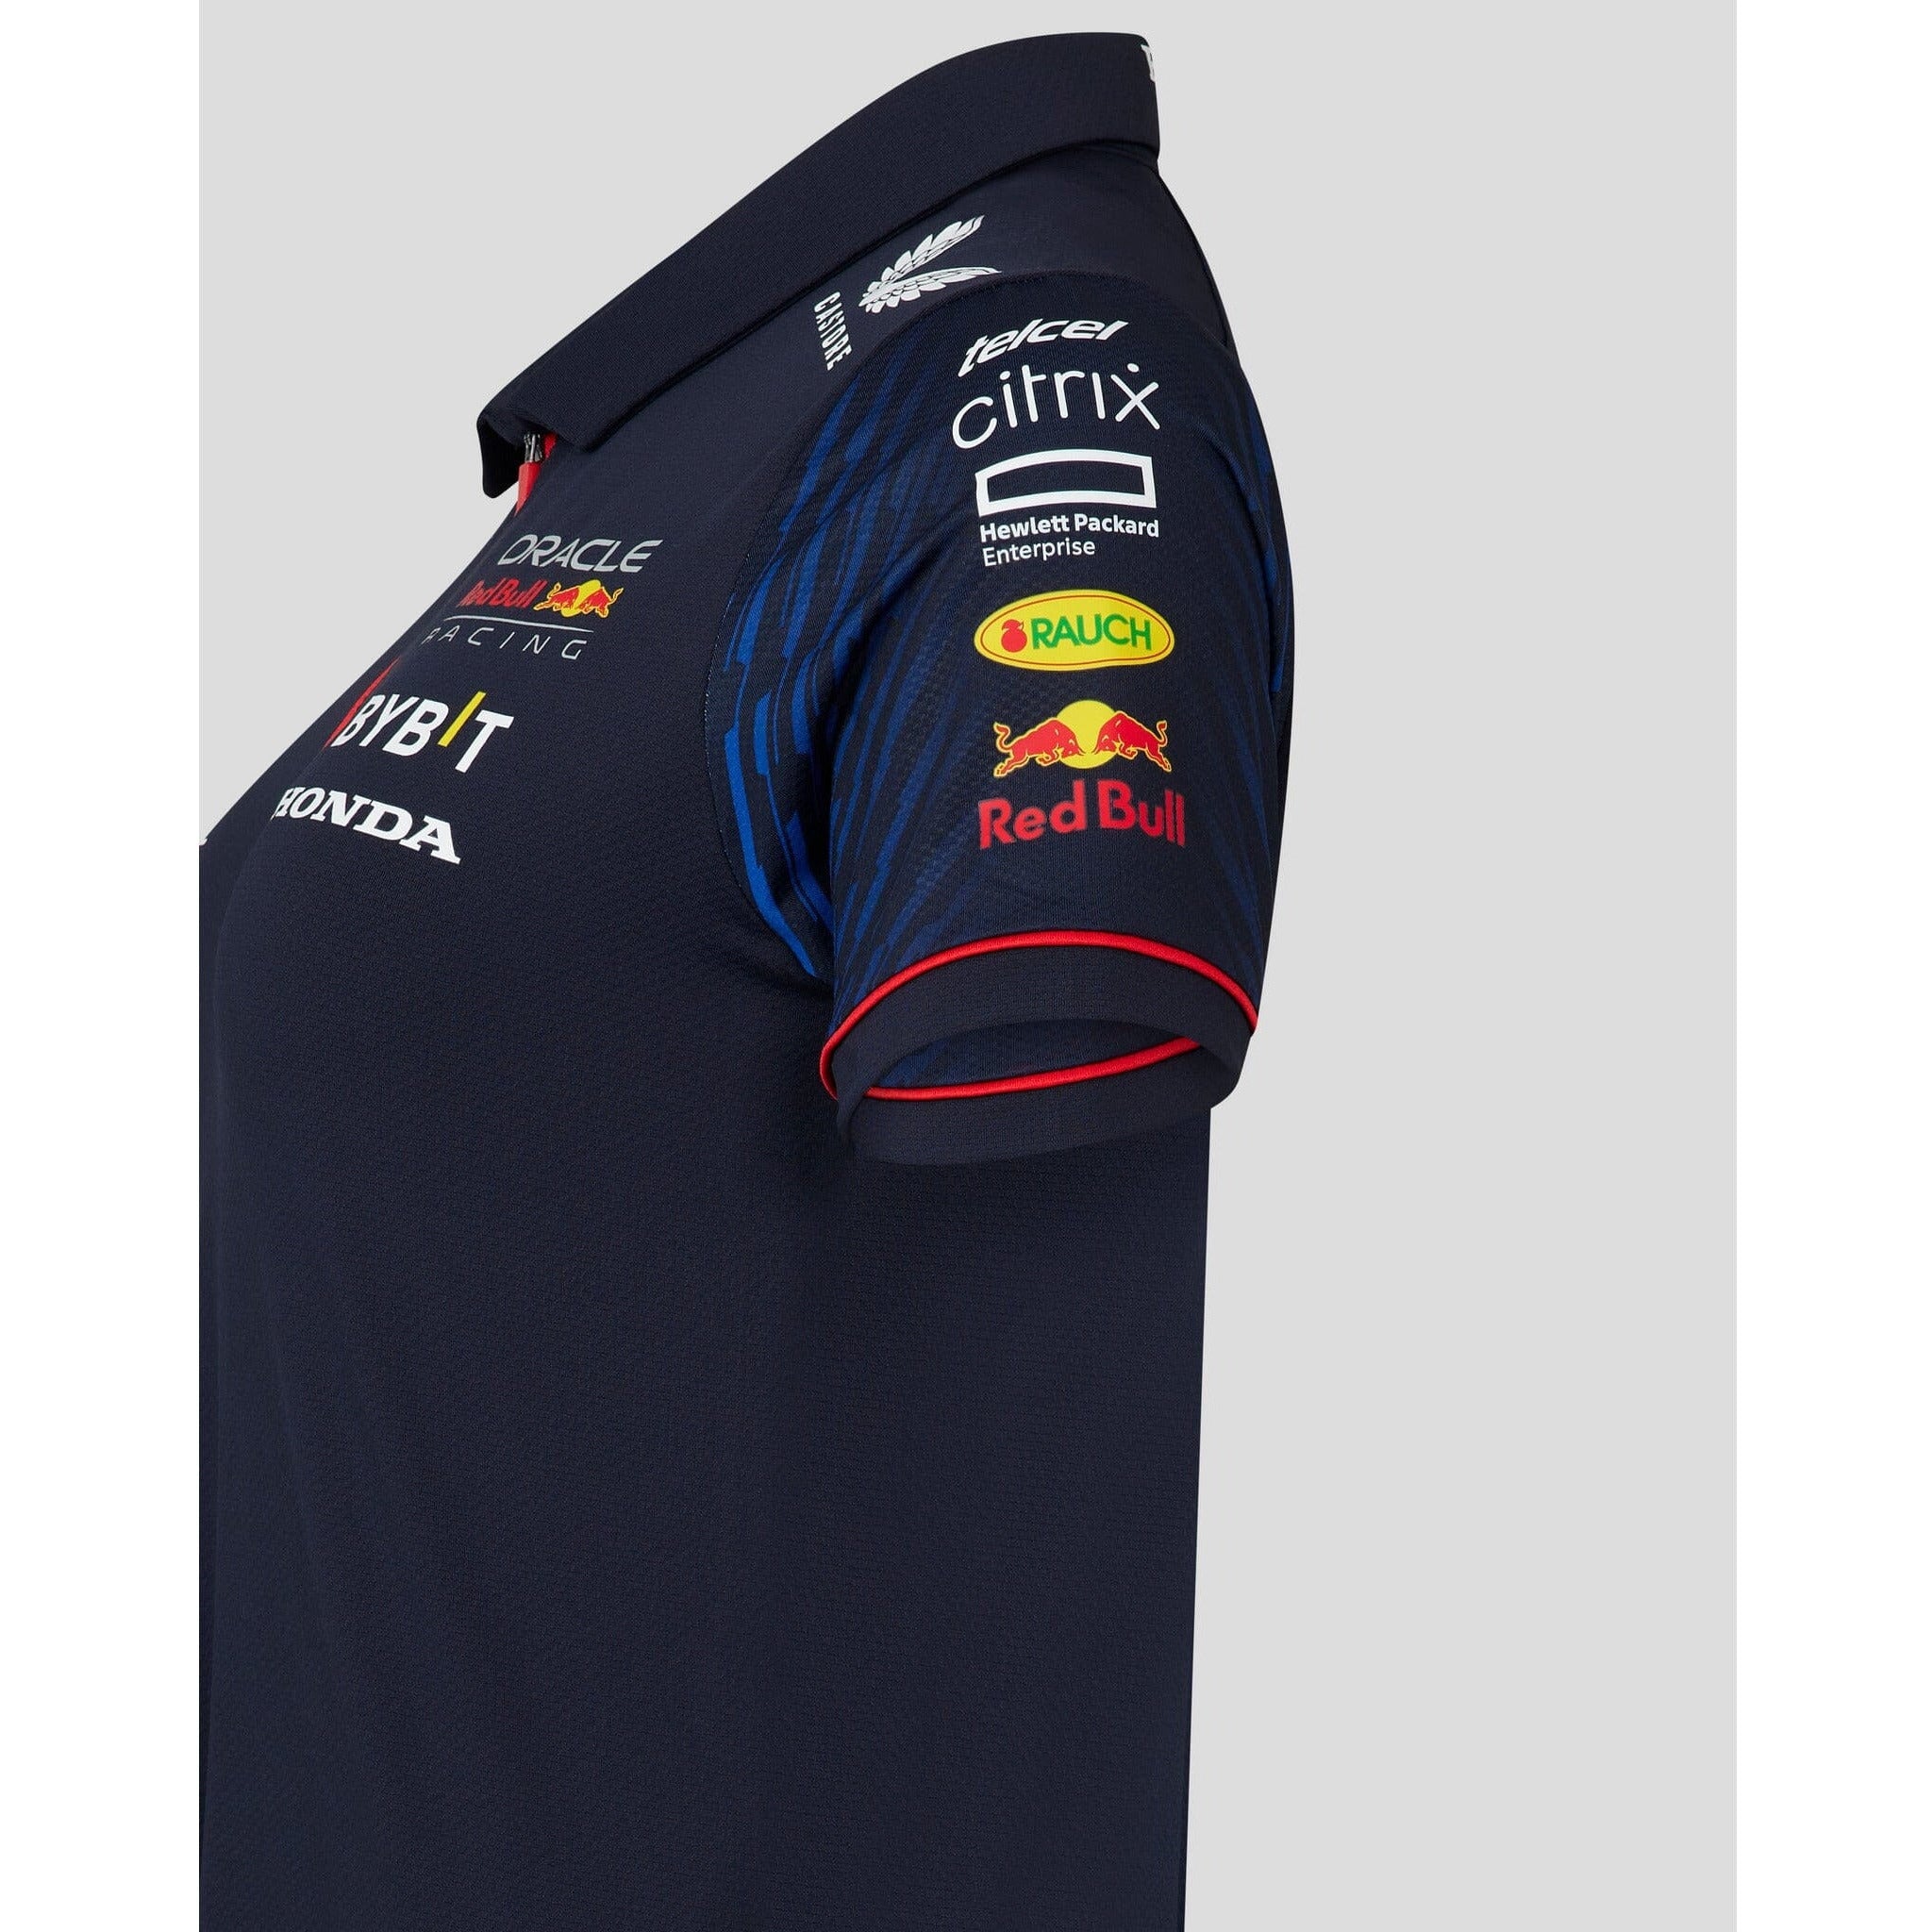 Womens 2021 Team T-Shirt - Red Bull Racing